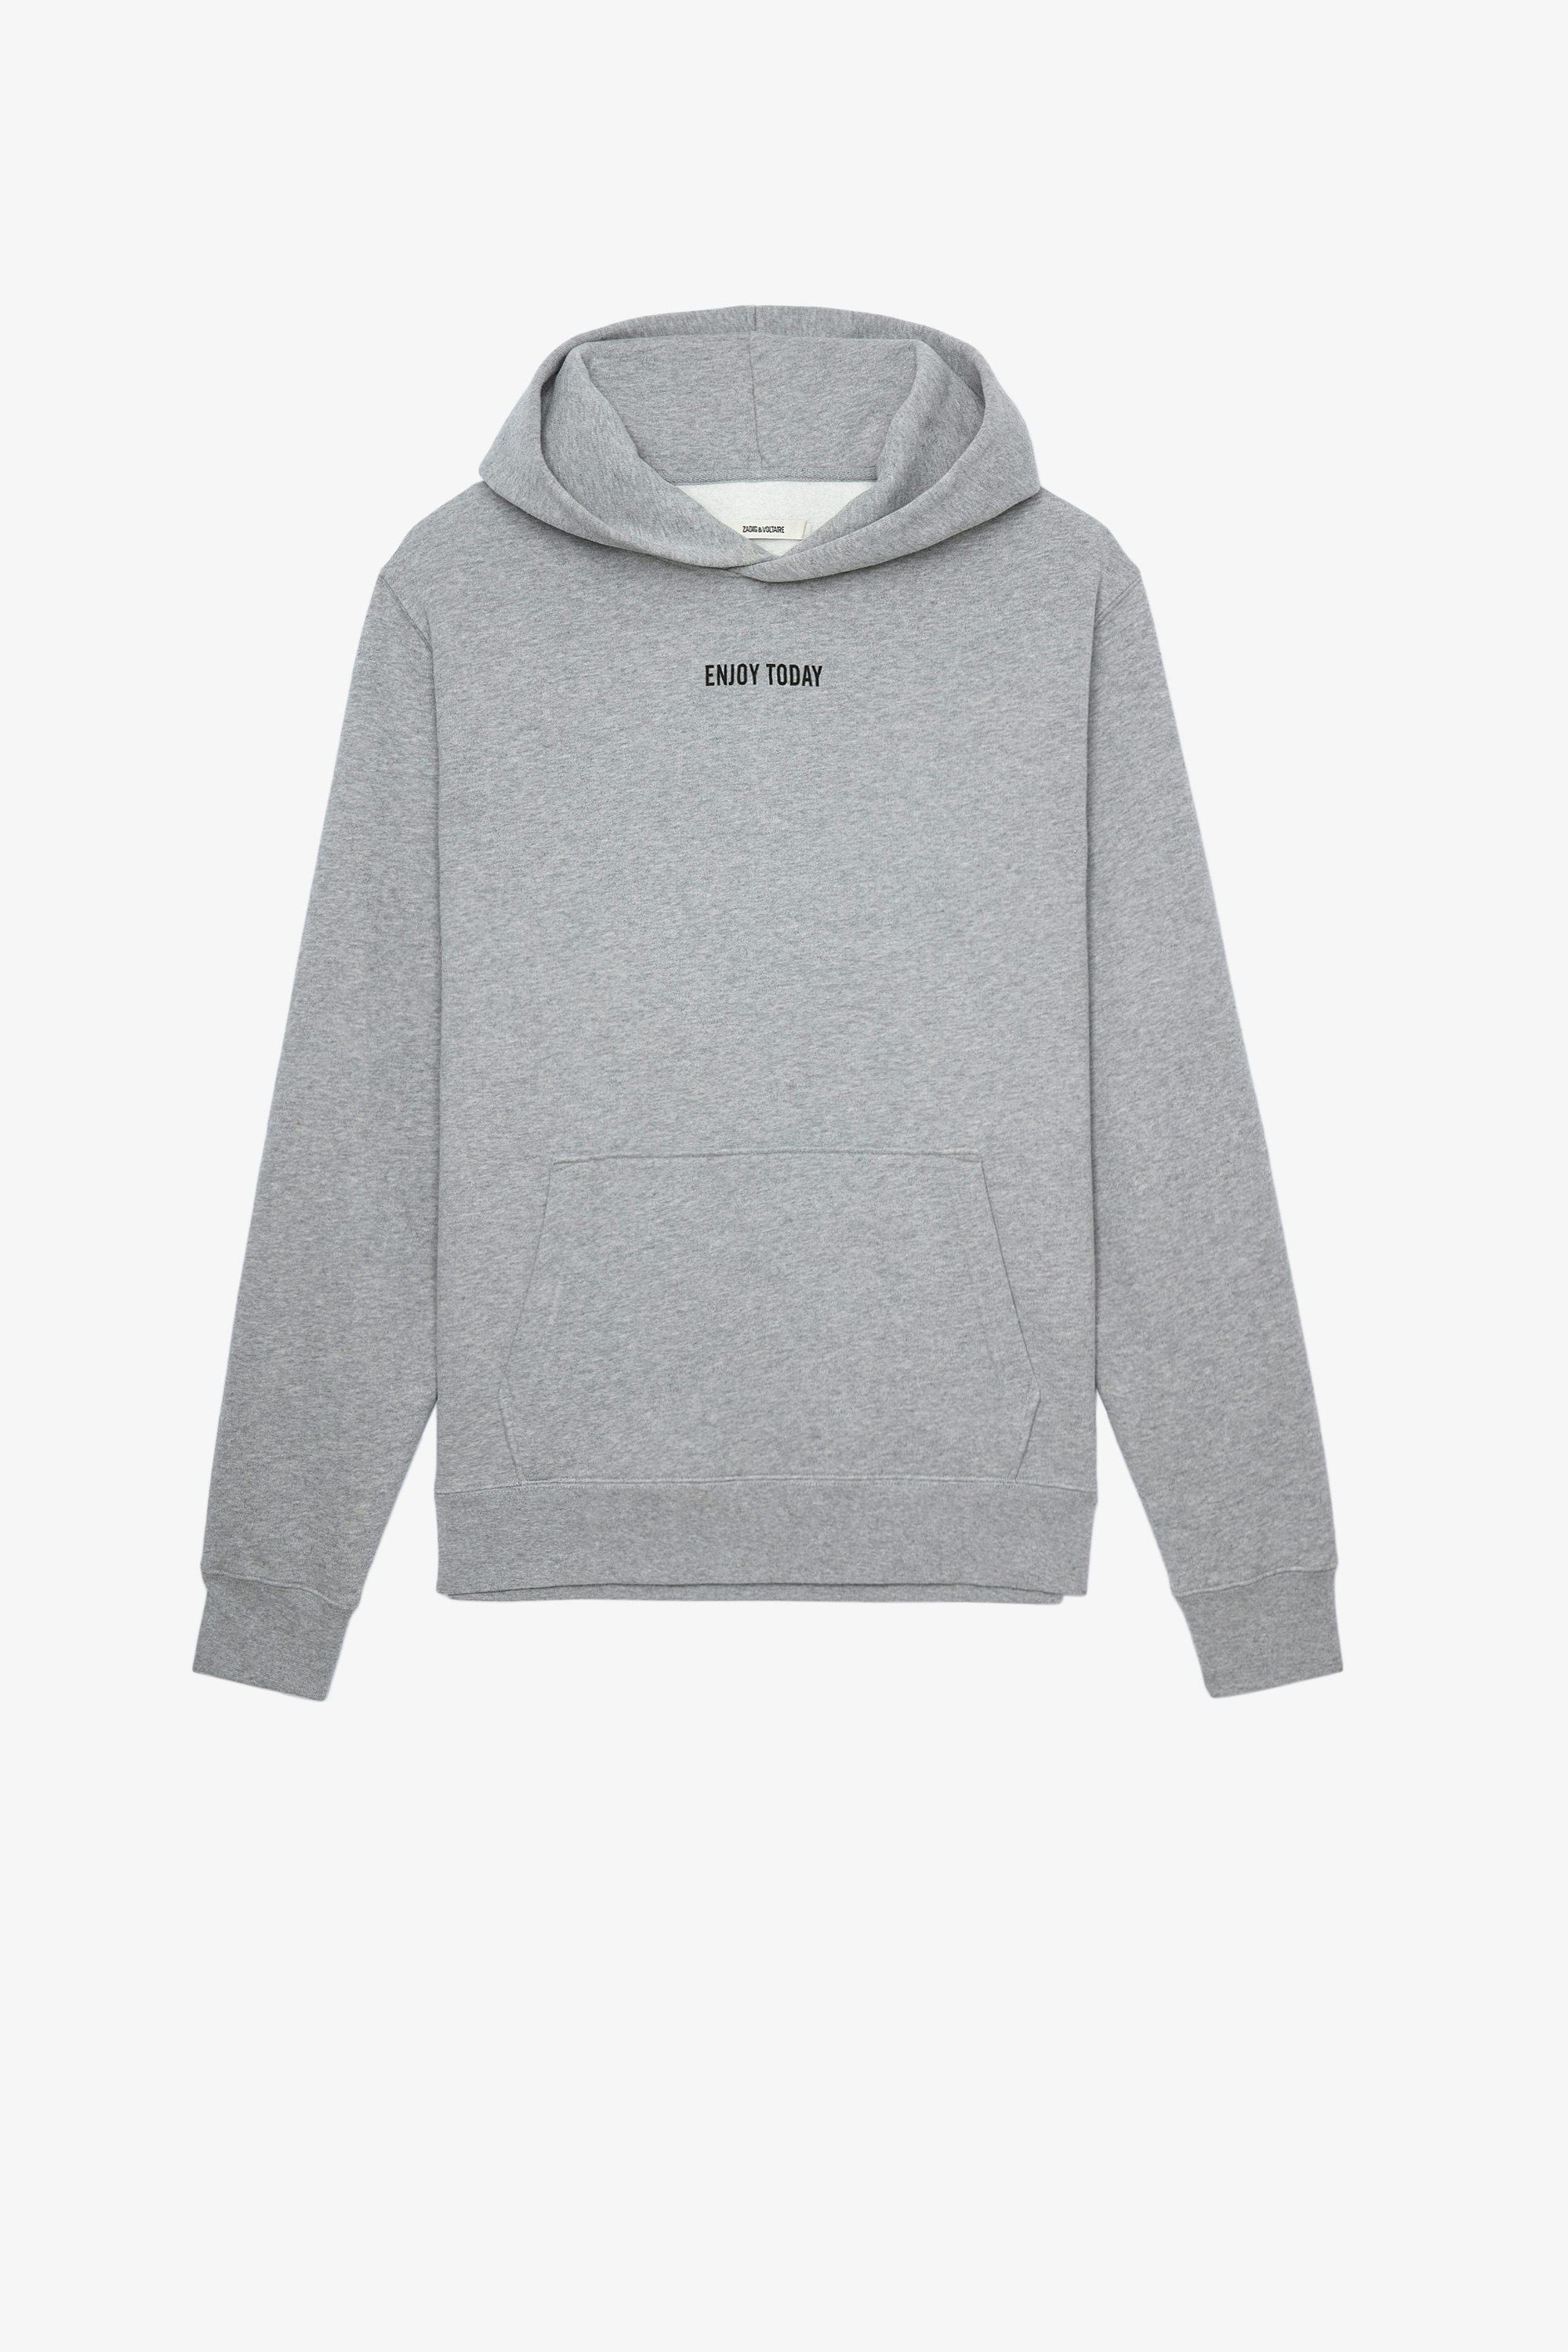 Sanchi Photoprint Sweatshirt Men’s light grey cotton sweatshirt with photoprint on back